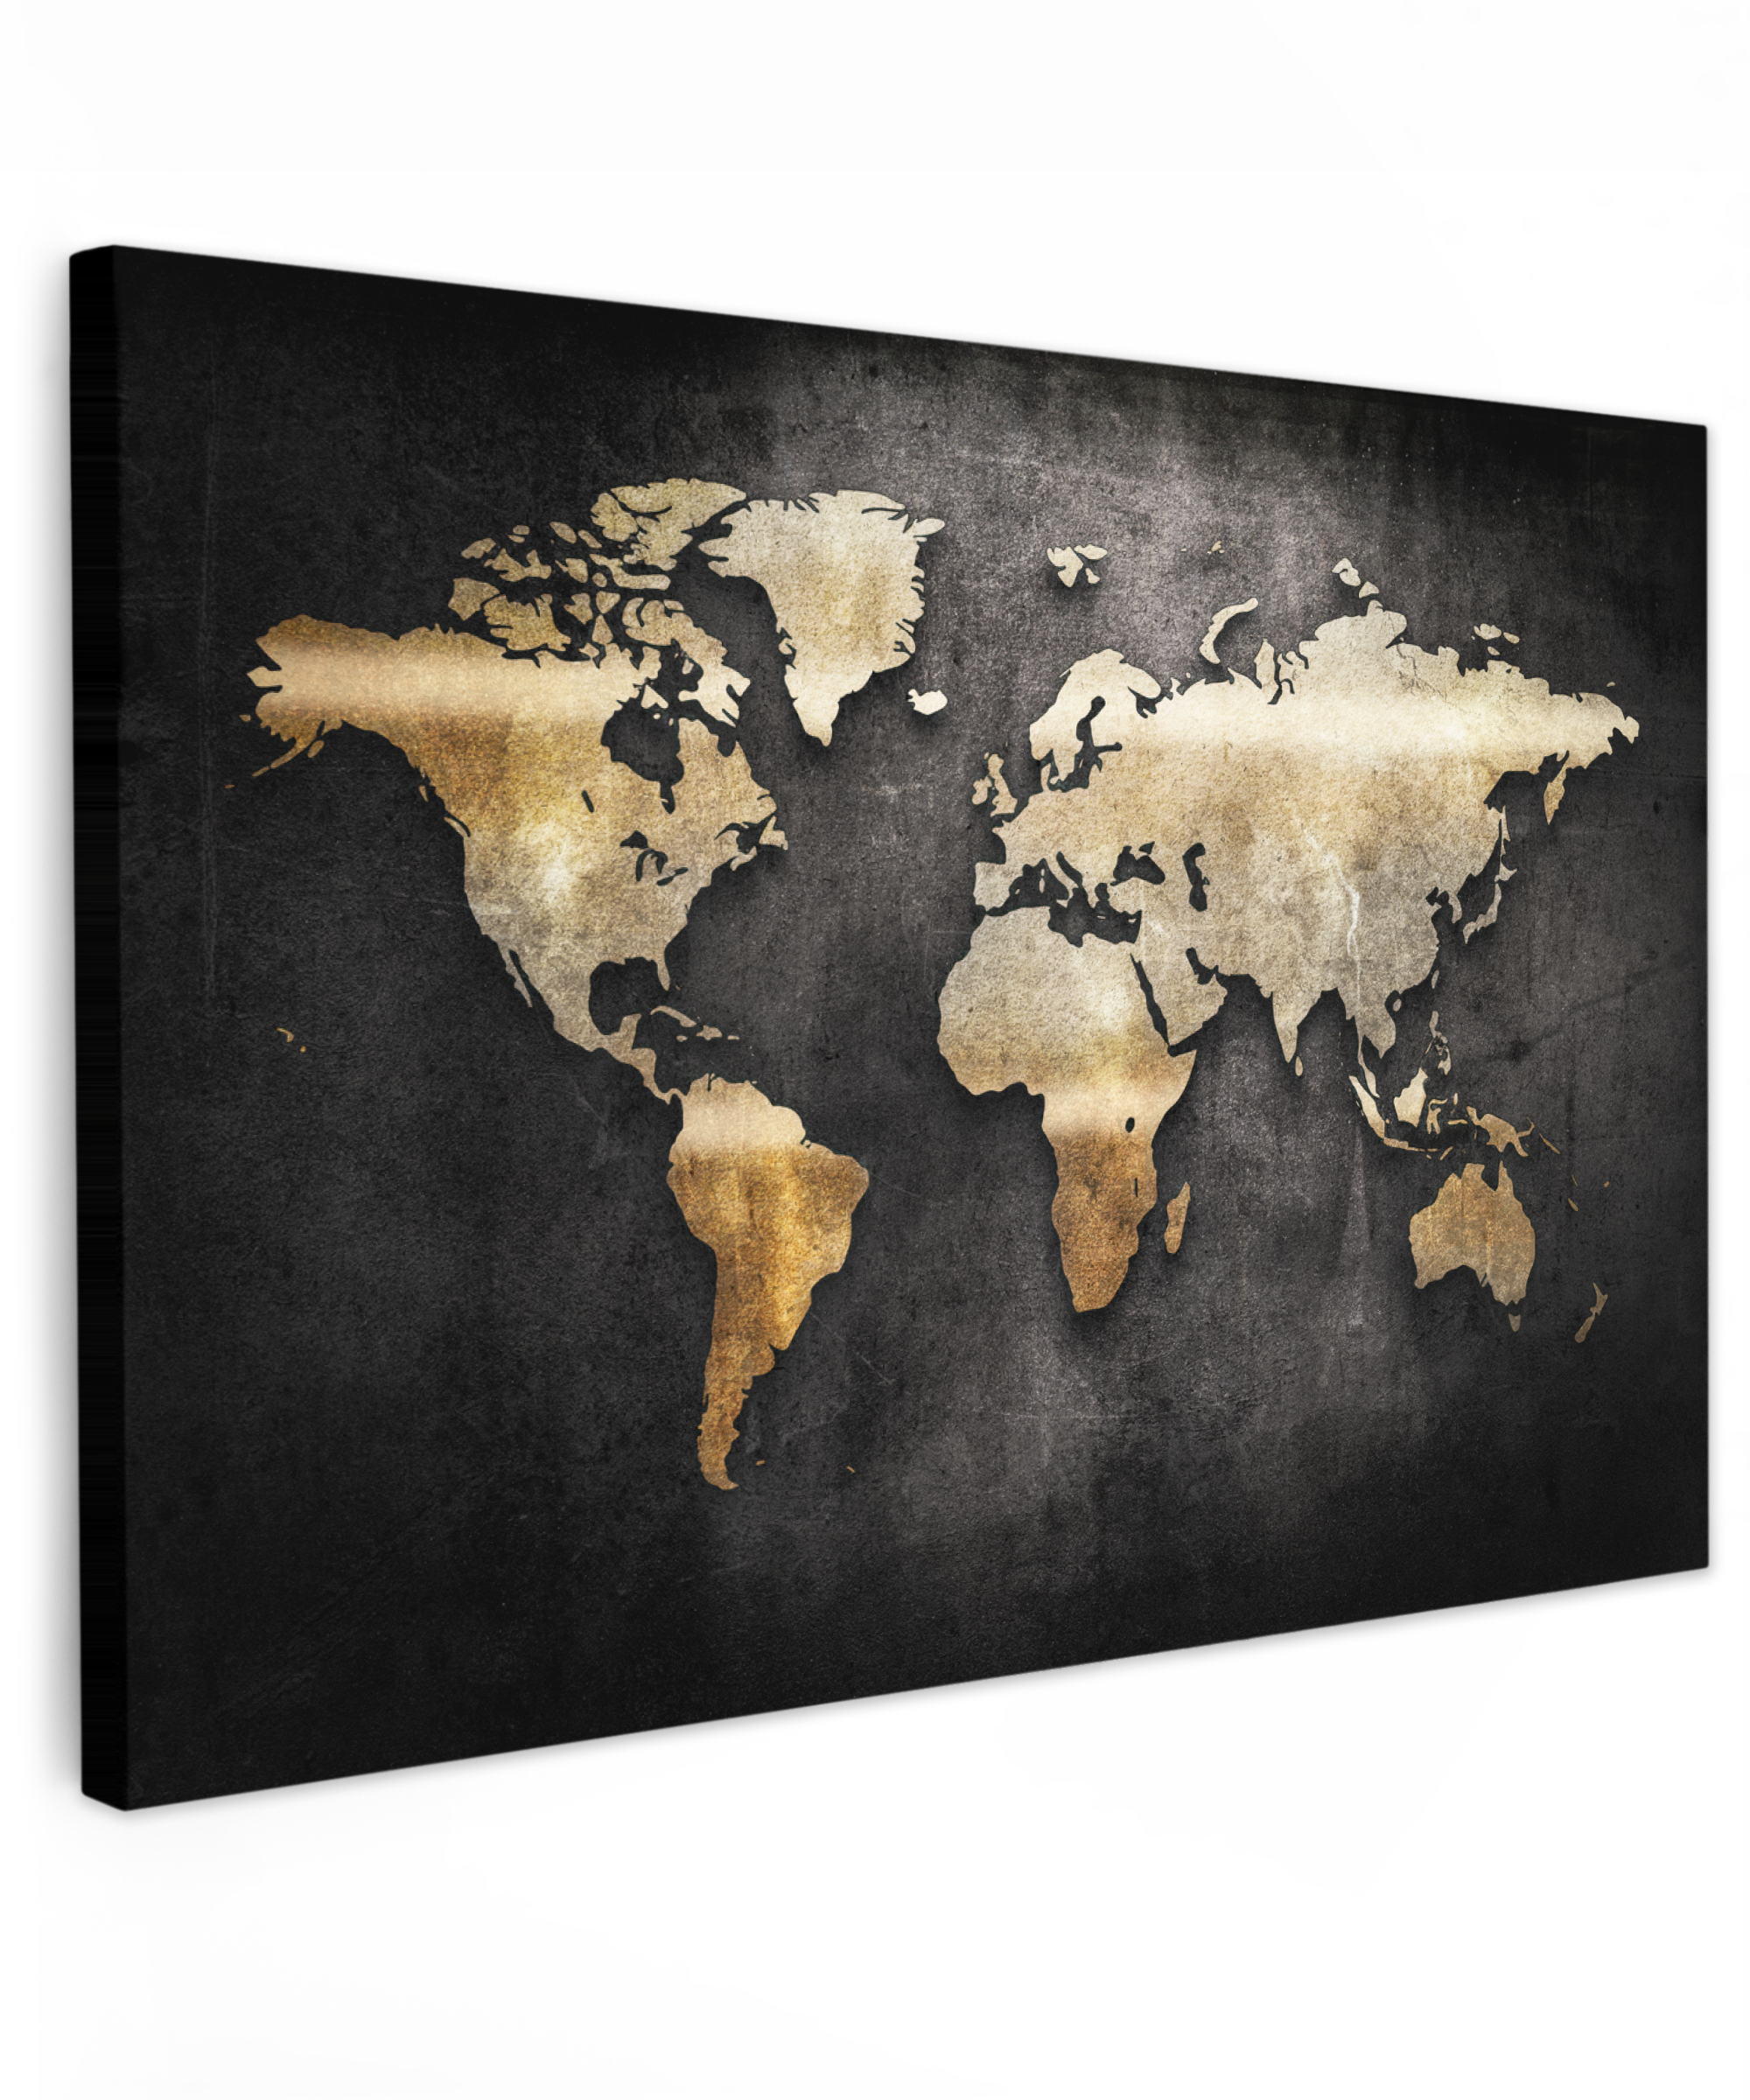 Leinwandbild - Weltkarte - Gold - Erde